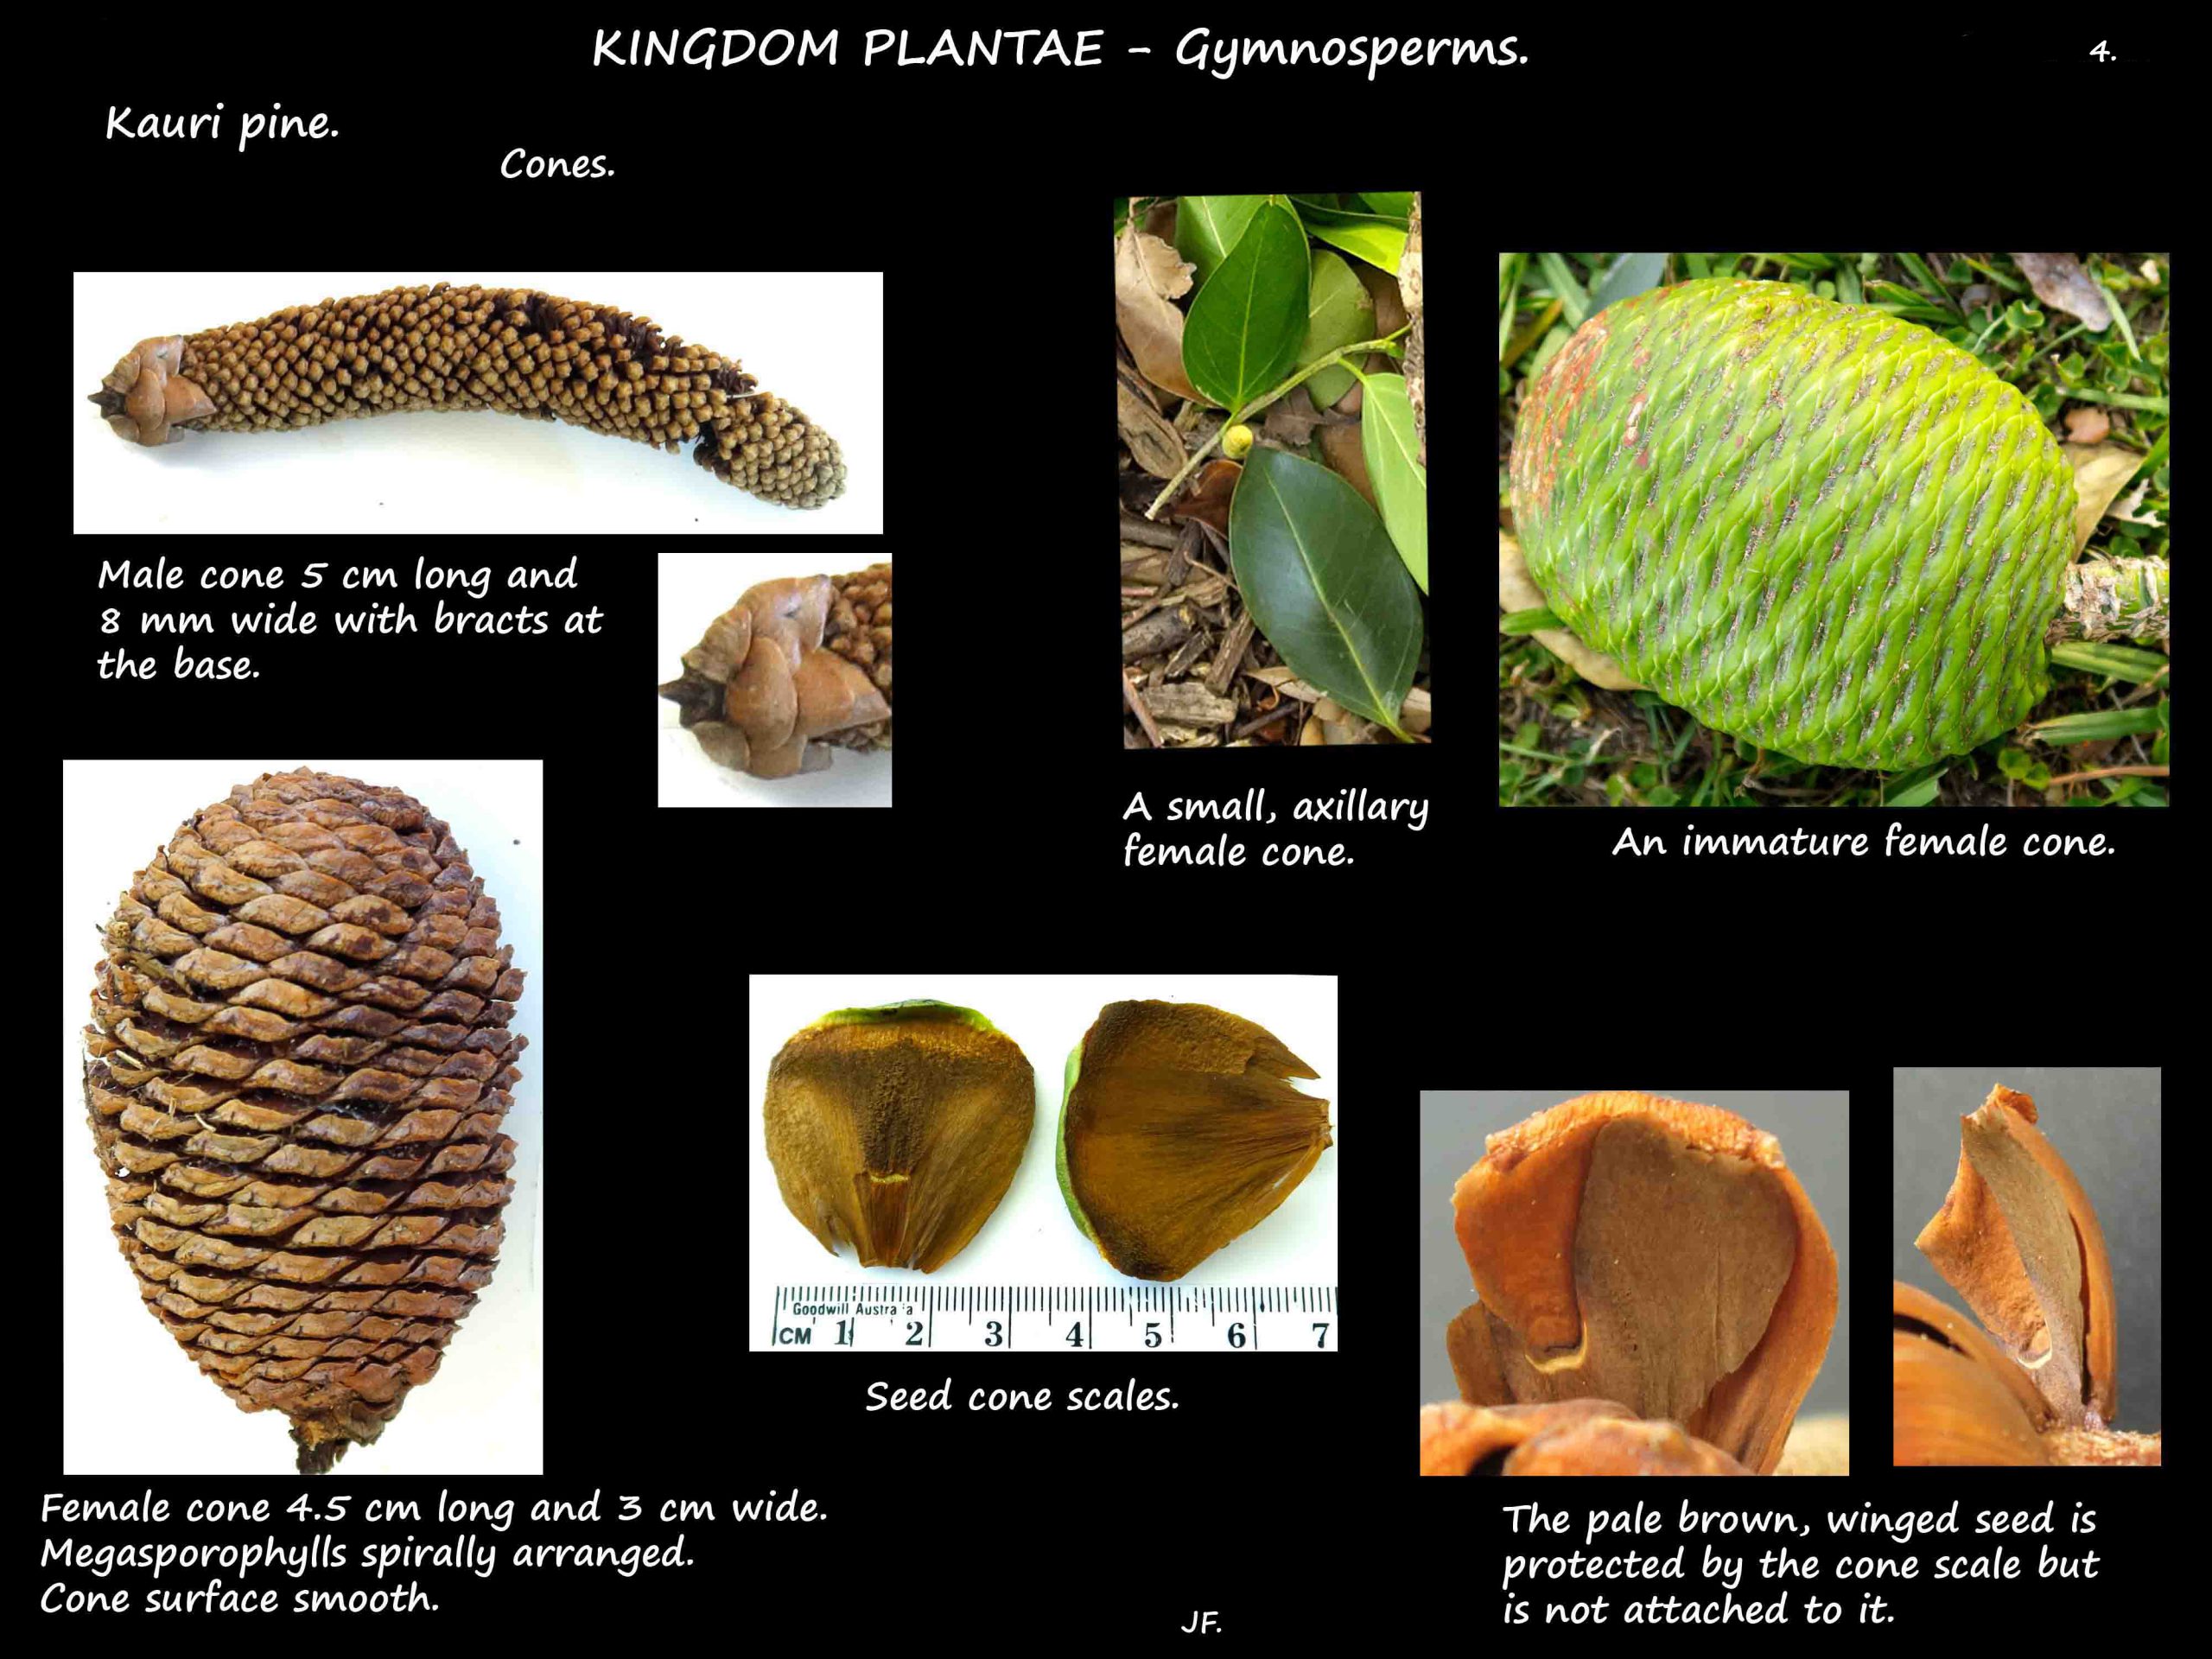 4 Kauri pine cones